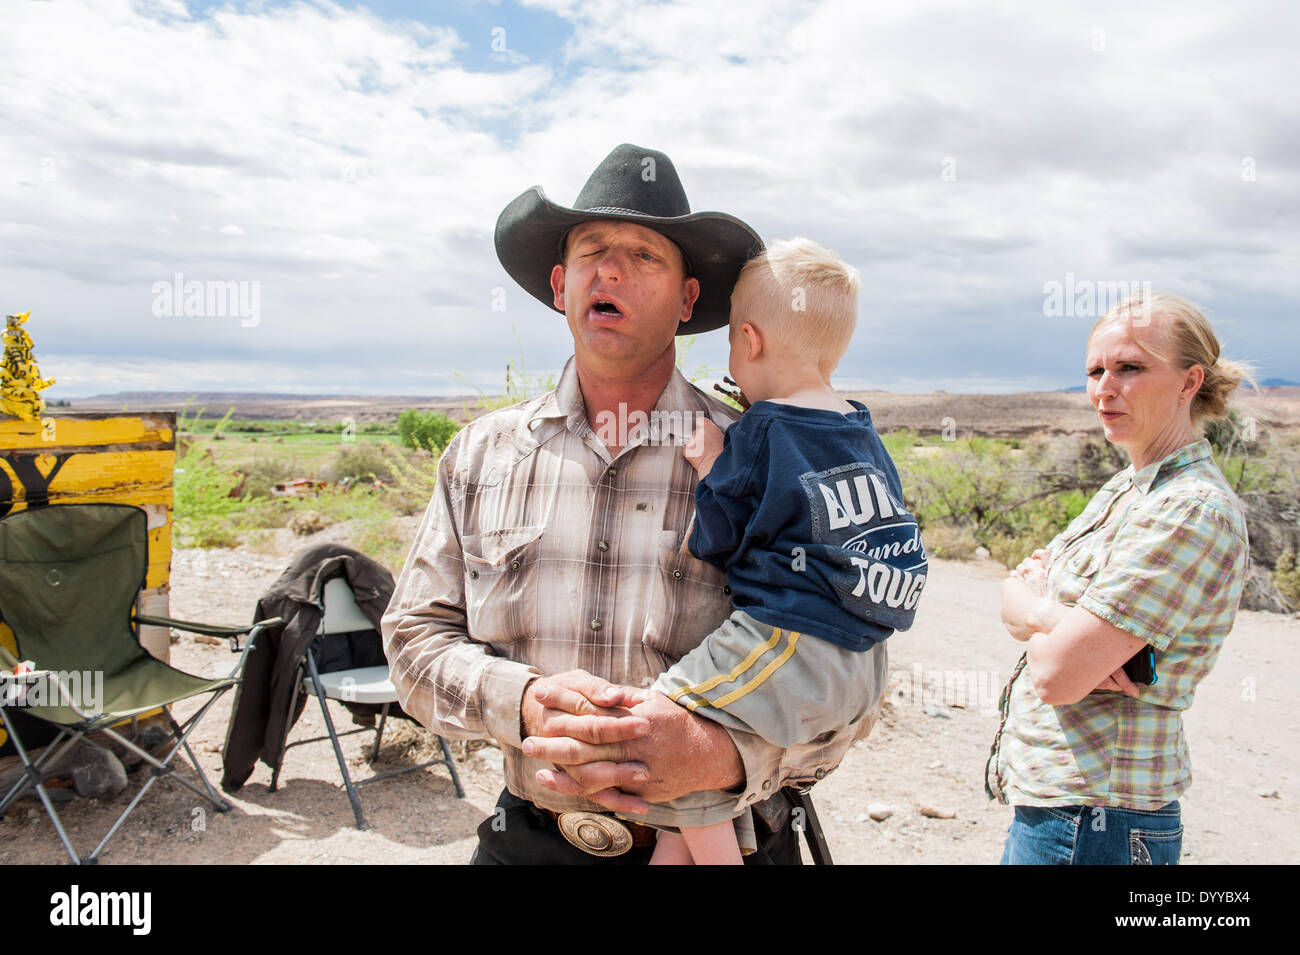 Bunkerville, Nevada, USA. 26th Apr, 2014. RYAN BUNDY, the son of C. Bundy,  speaks to the press on Bundy's ranch near Bunkerville, Nev. Ryan Bundy said  that his father, an embattled rancher